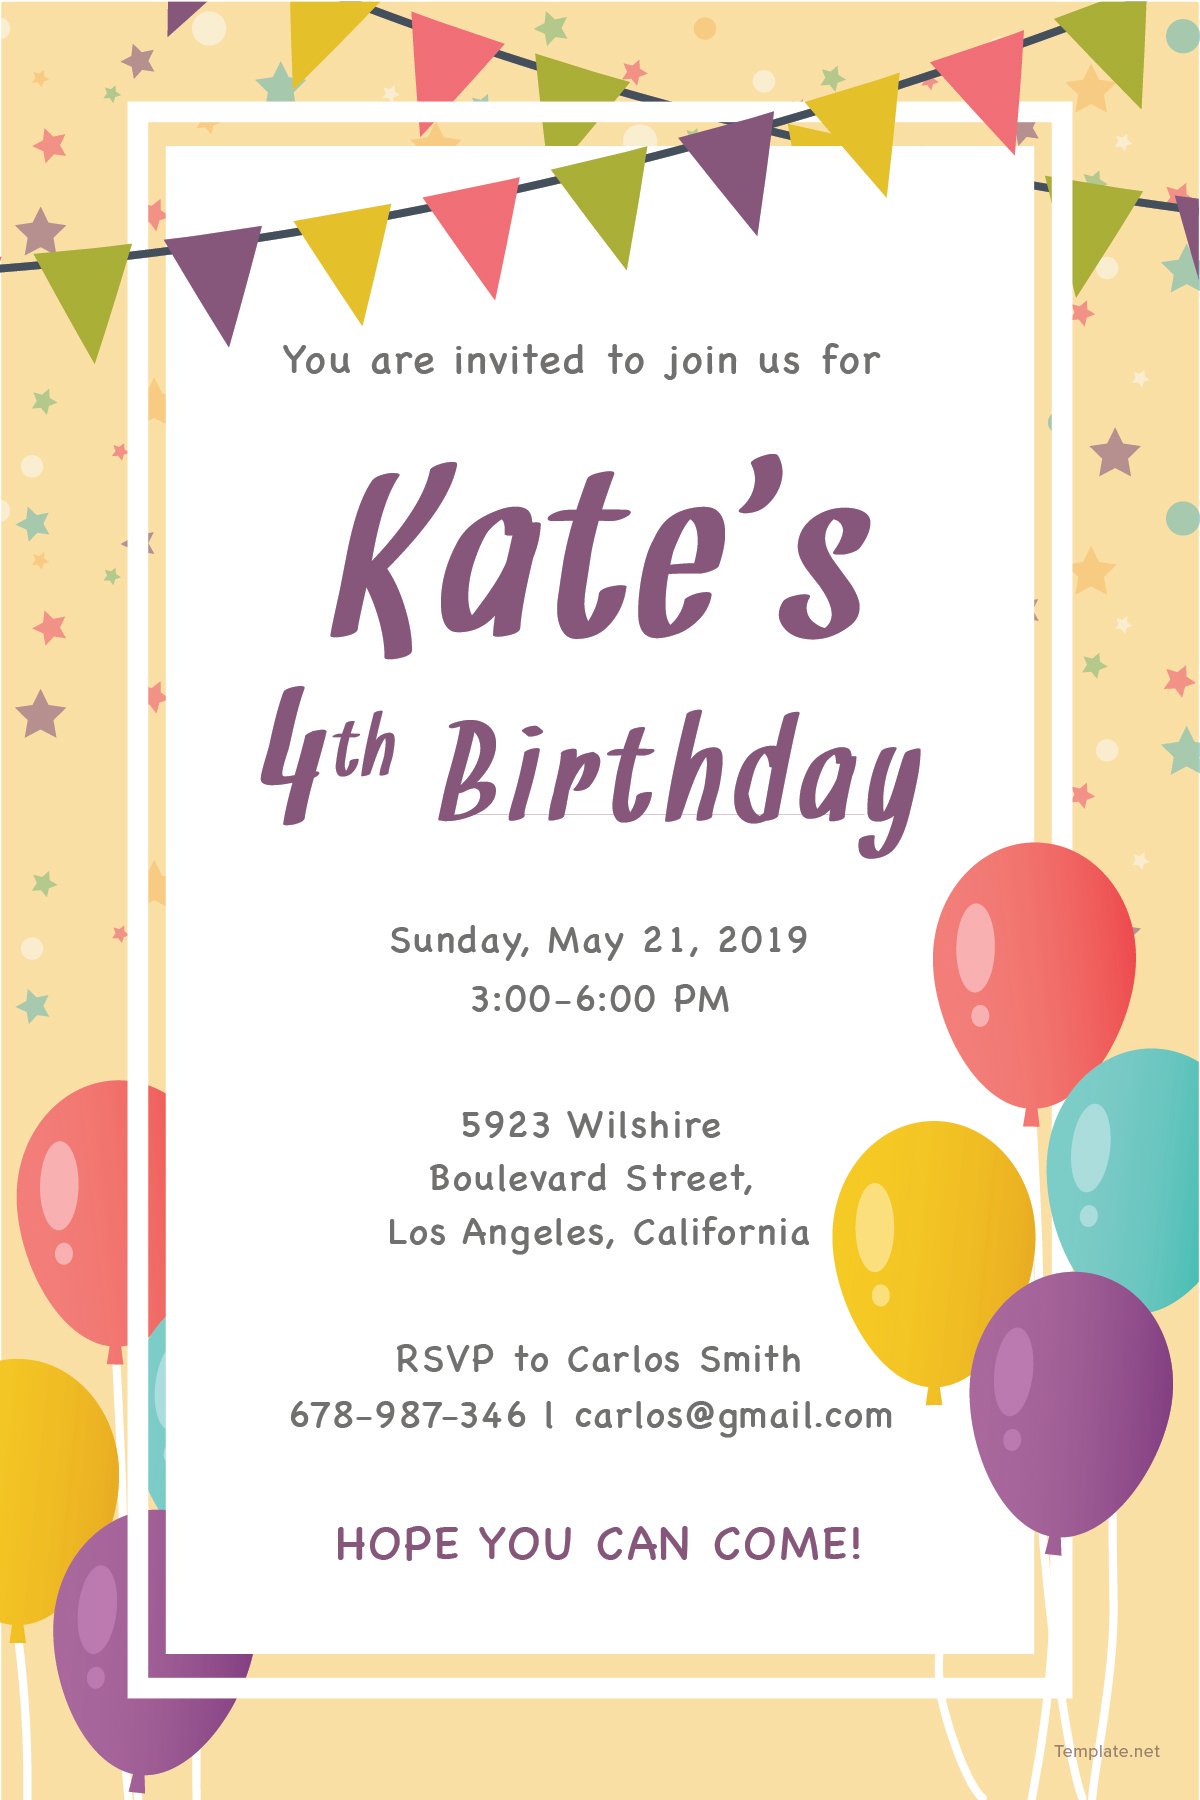 Email Birthday Invitation Template in Adobe Photoshop, Illustrator